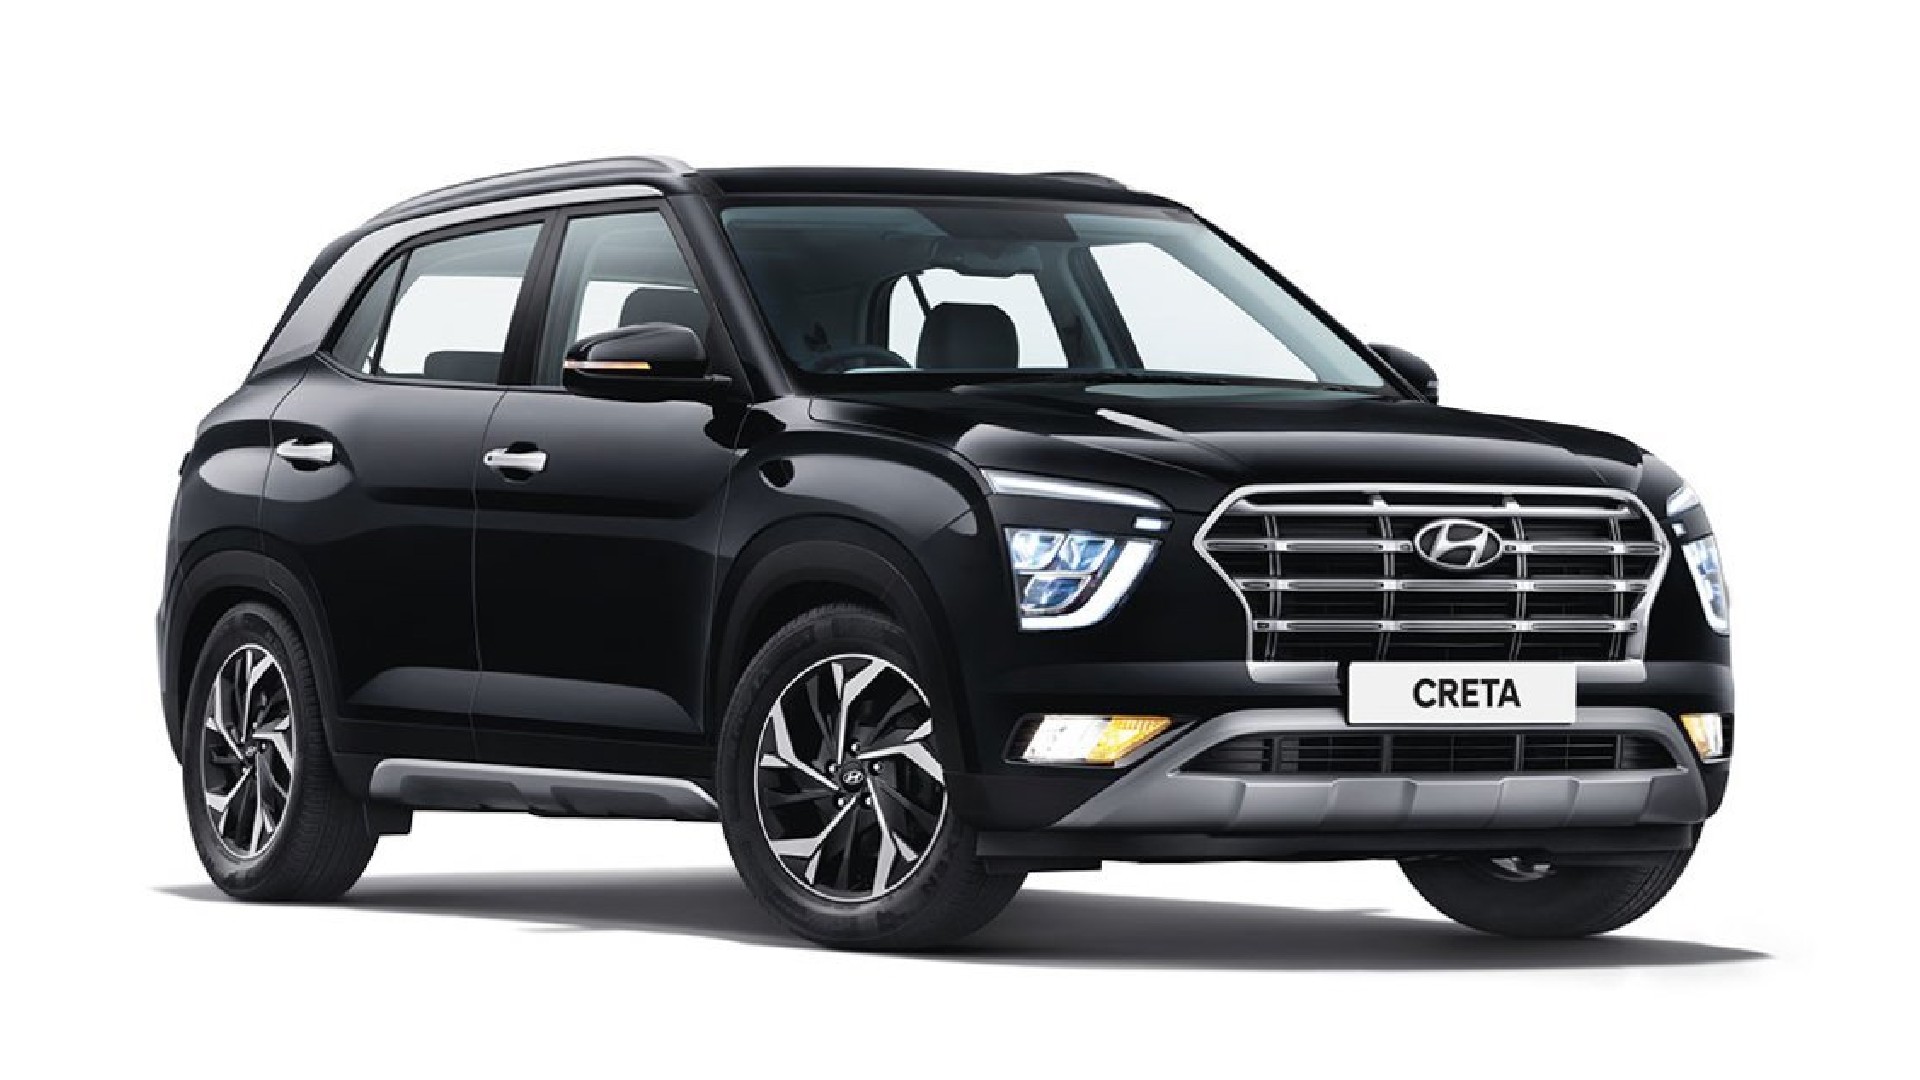 New Hyundai Creta Launching Soon: Expect These Big Changes Full Details